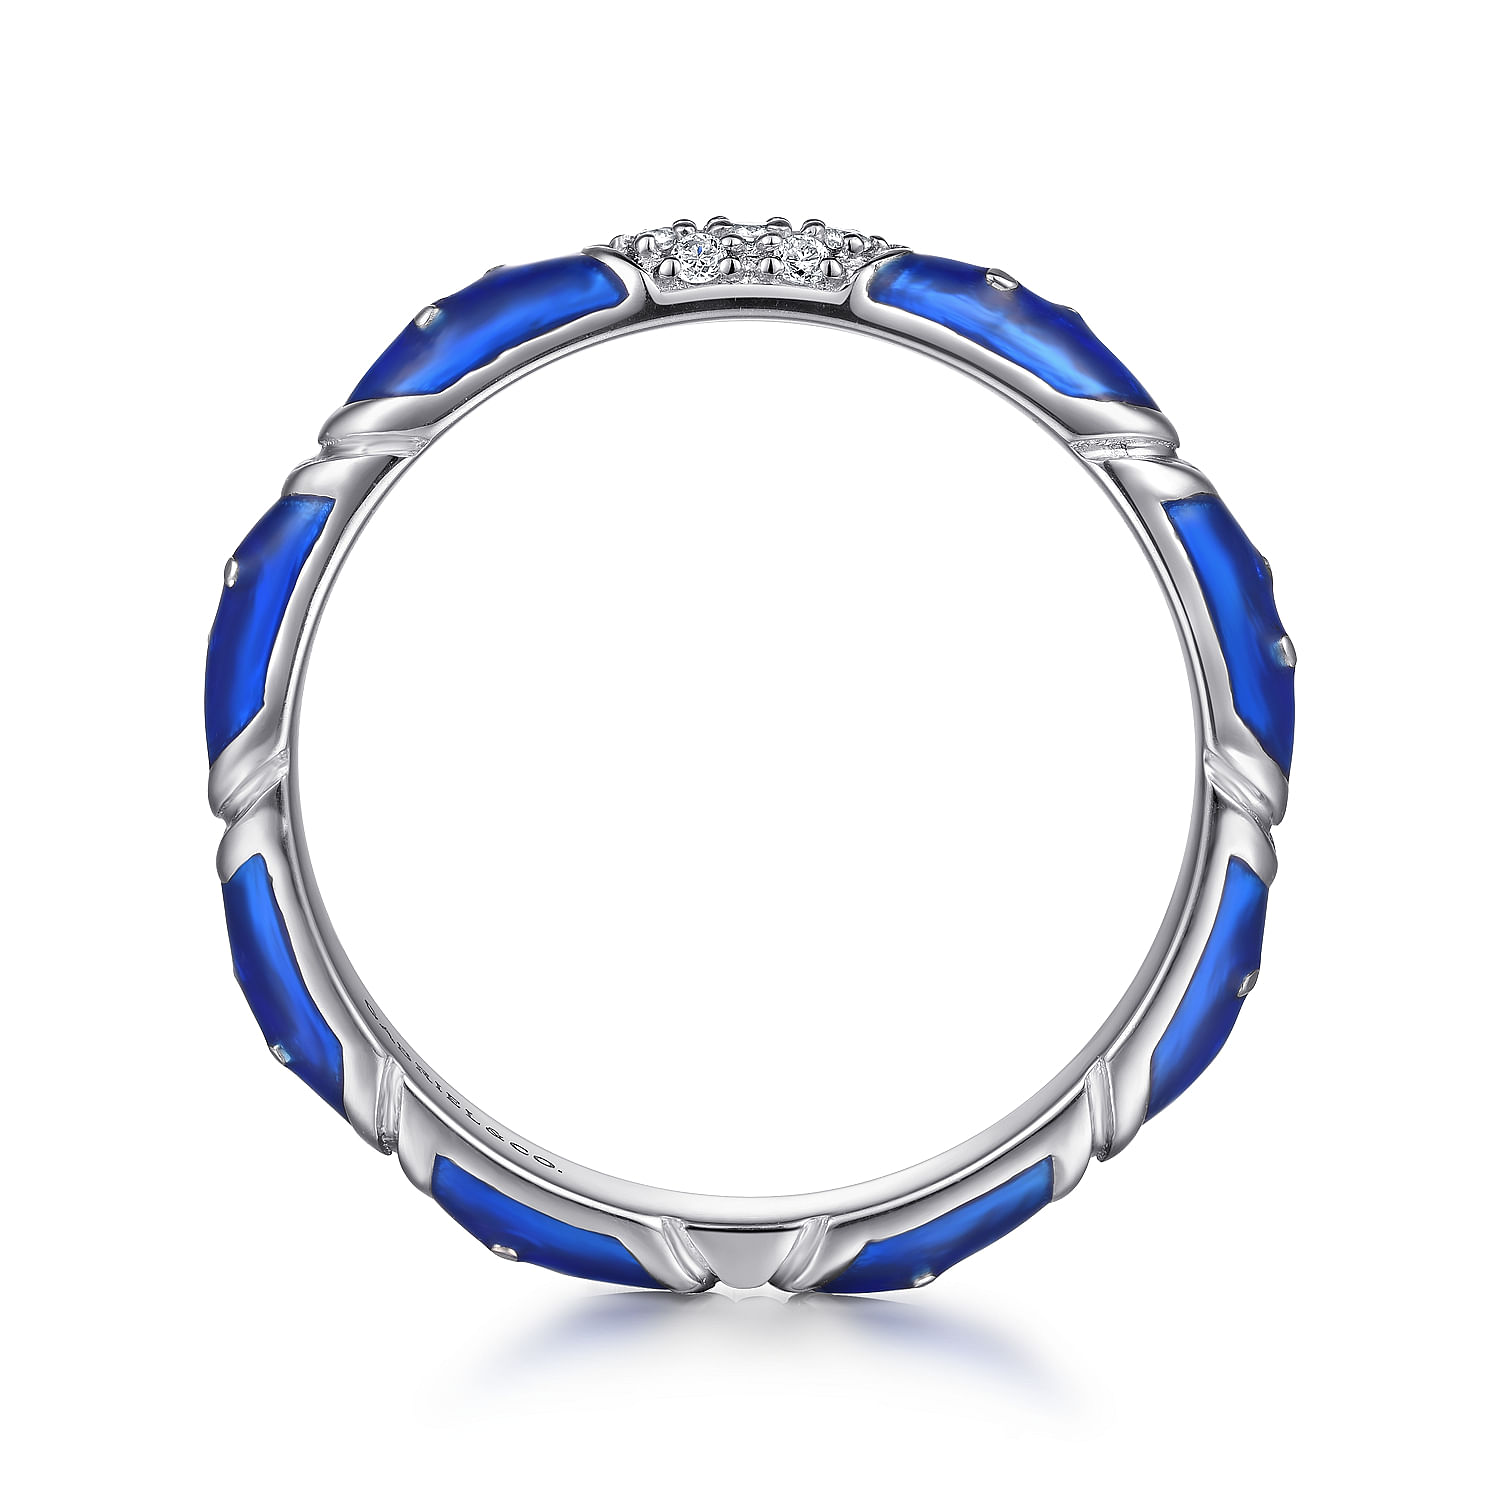 Enamel - 925 Sterling Silver Blue Enameled Ring with Diamonds - Shot 2